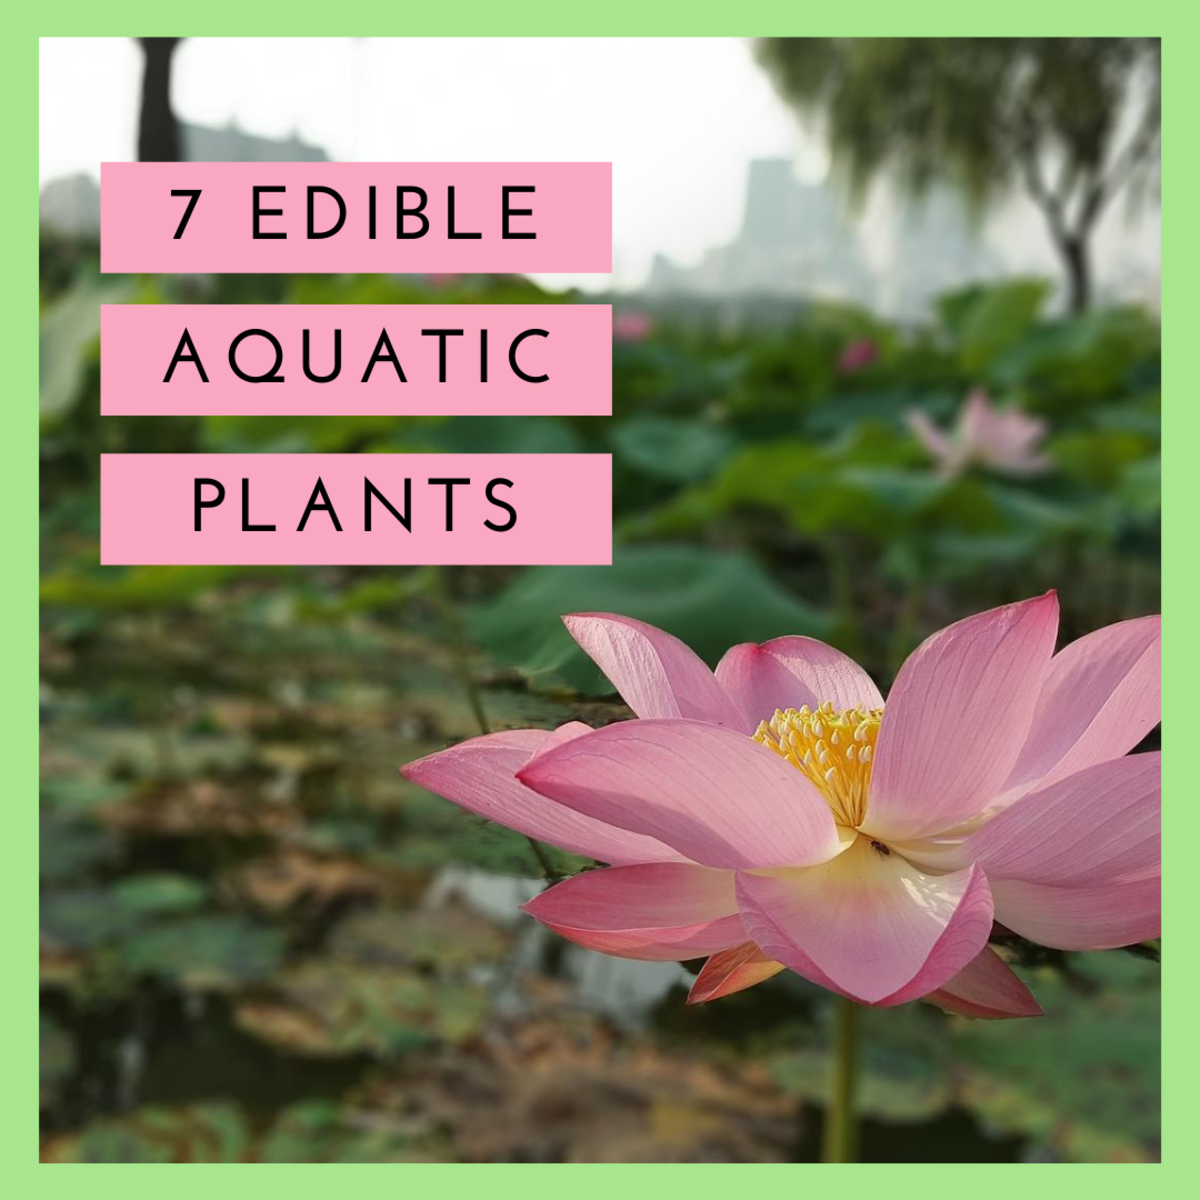 A Guide to Edible Aquatic Plants - Dengarden